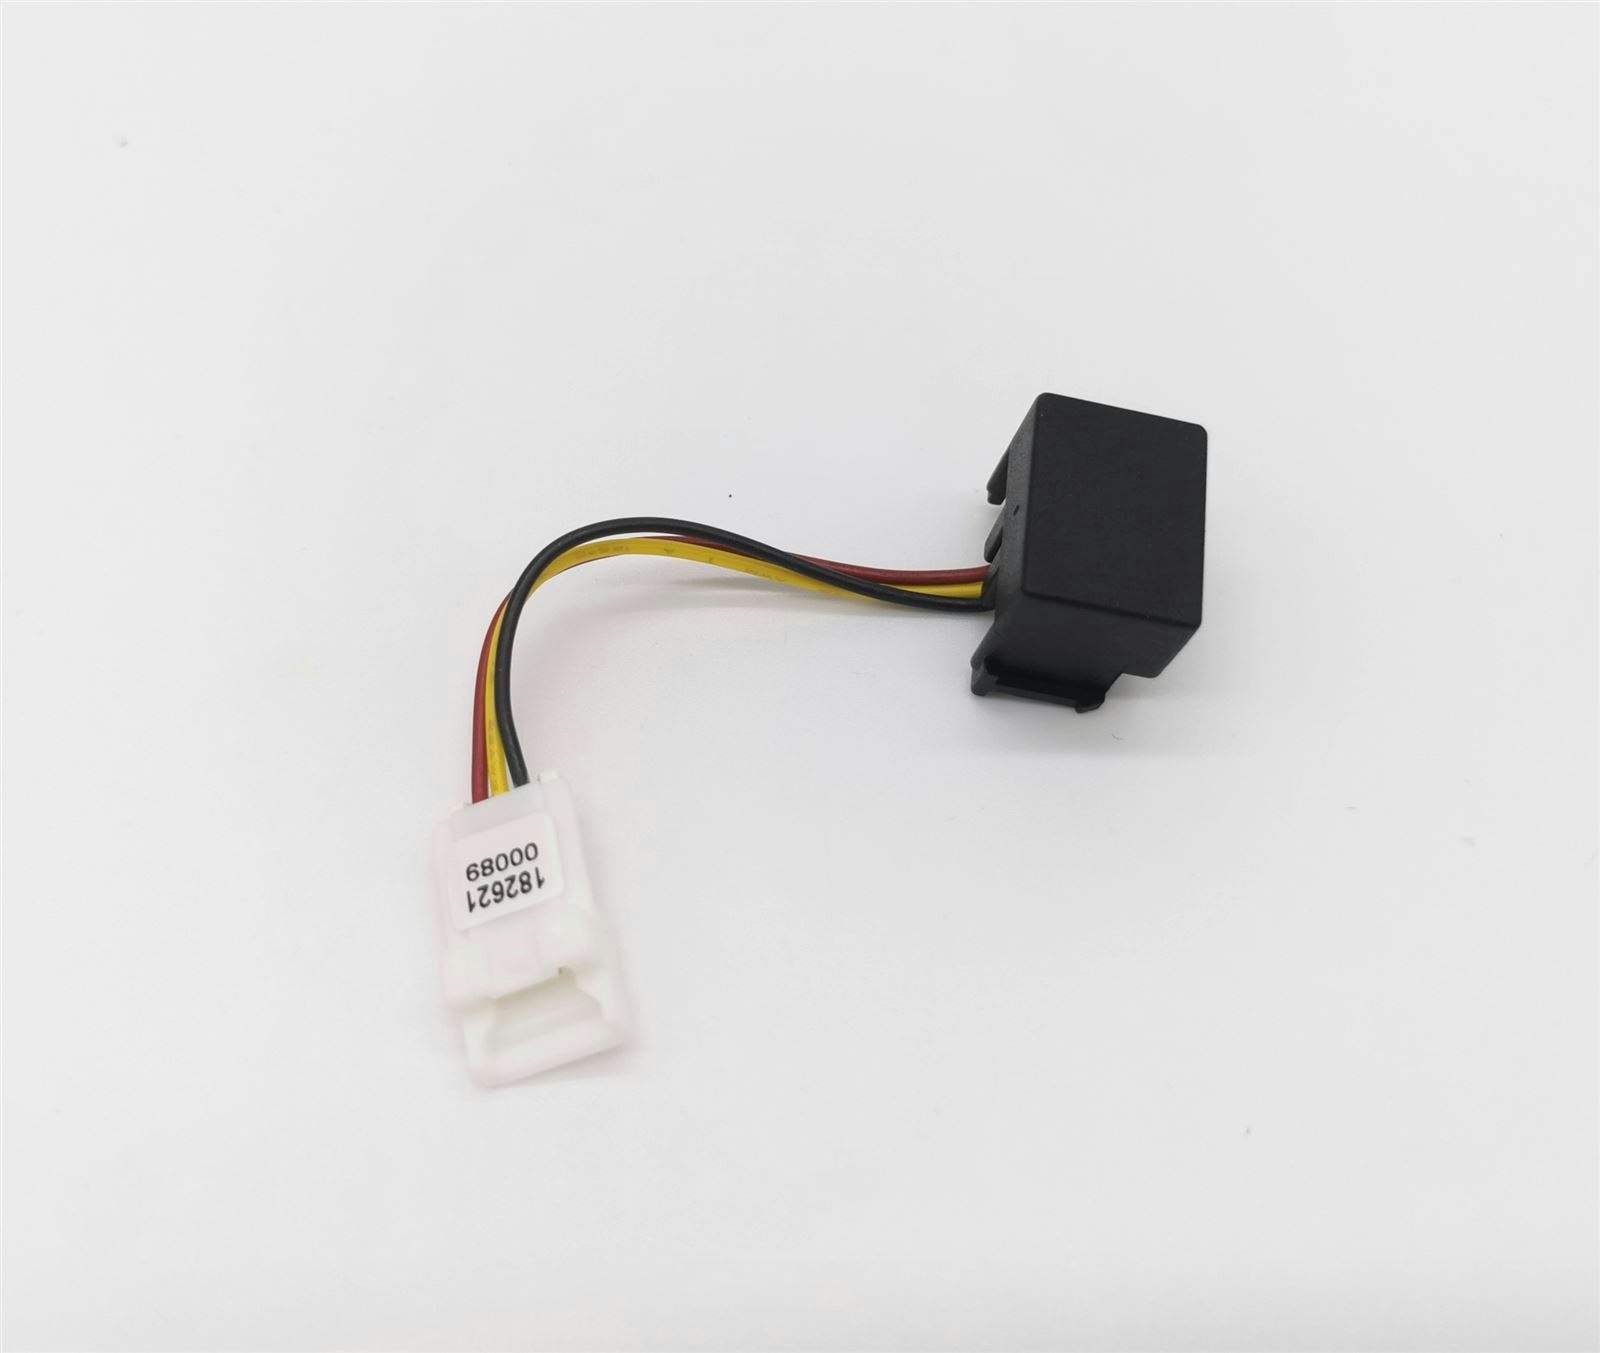 50032334 - Bump sensor / detection plate